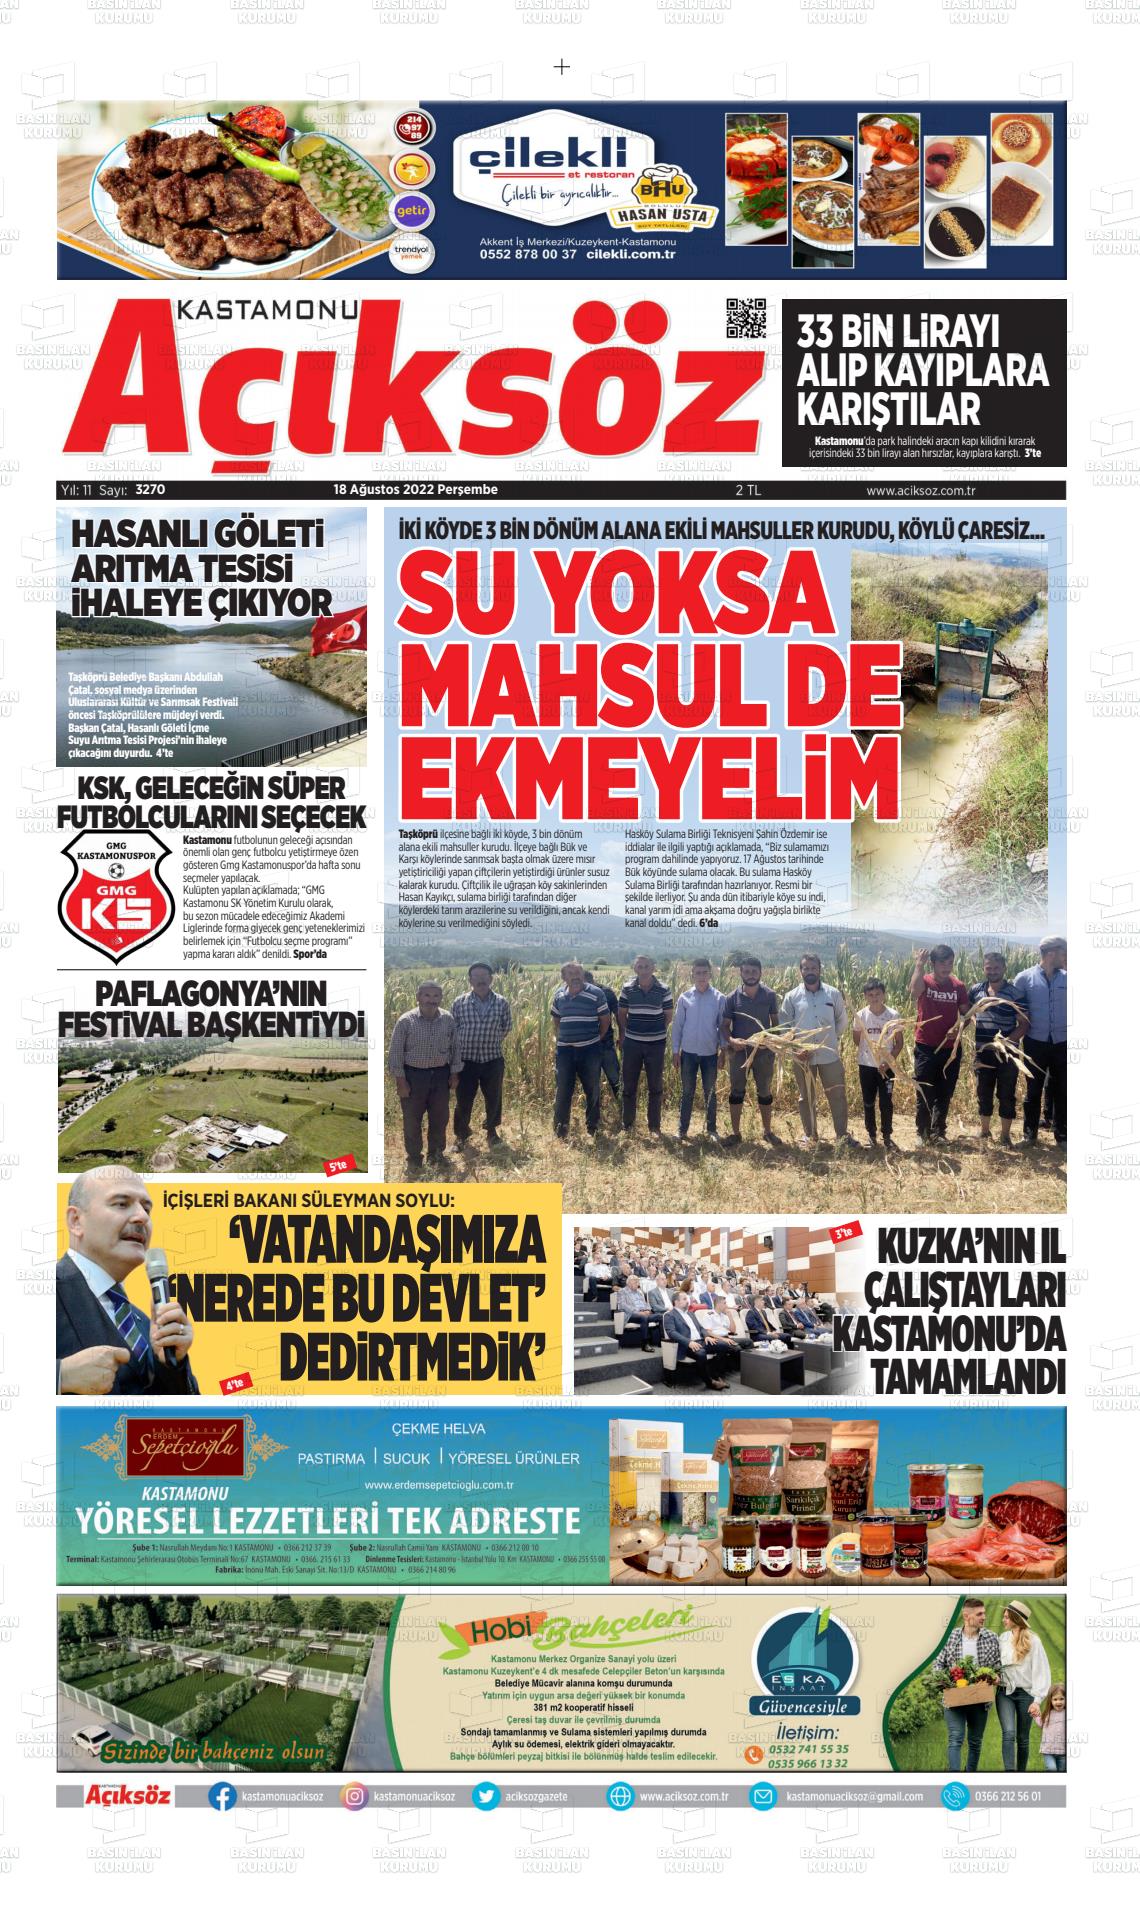 KASTAMONU AÇIKSÖZ GAZETESİ Gazete Manşeti